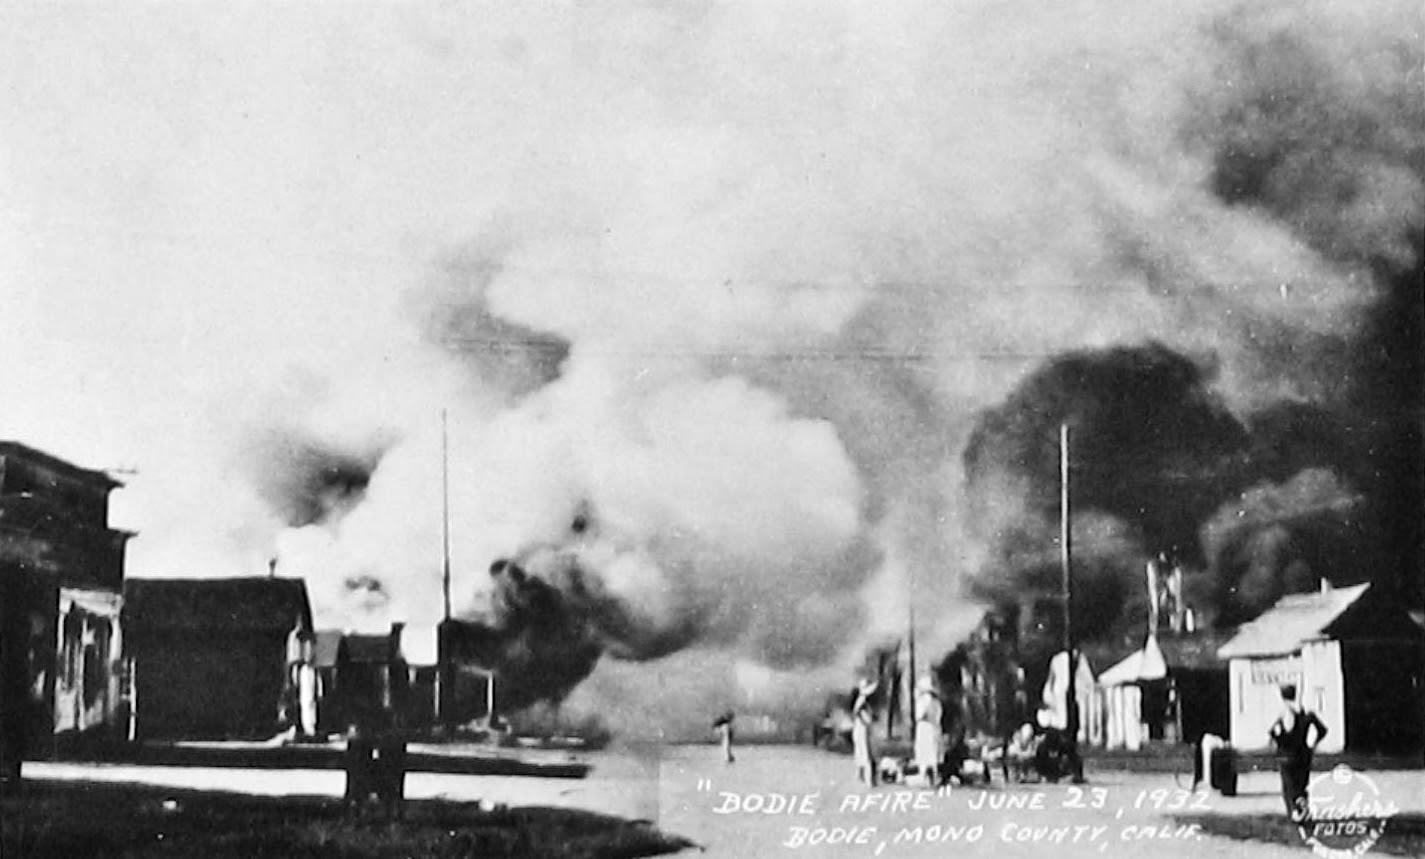 "Bodie afire" - June 23, 1932 - Bodie, Mono County, Calif. | Bodie.com